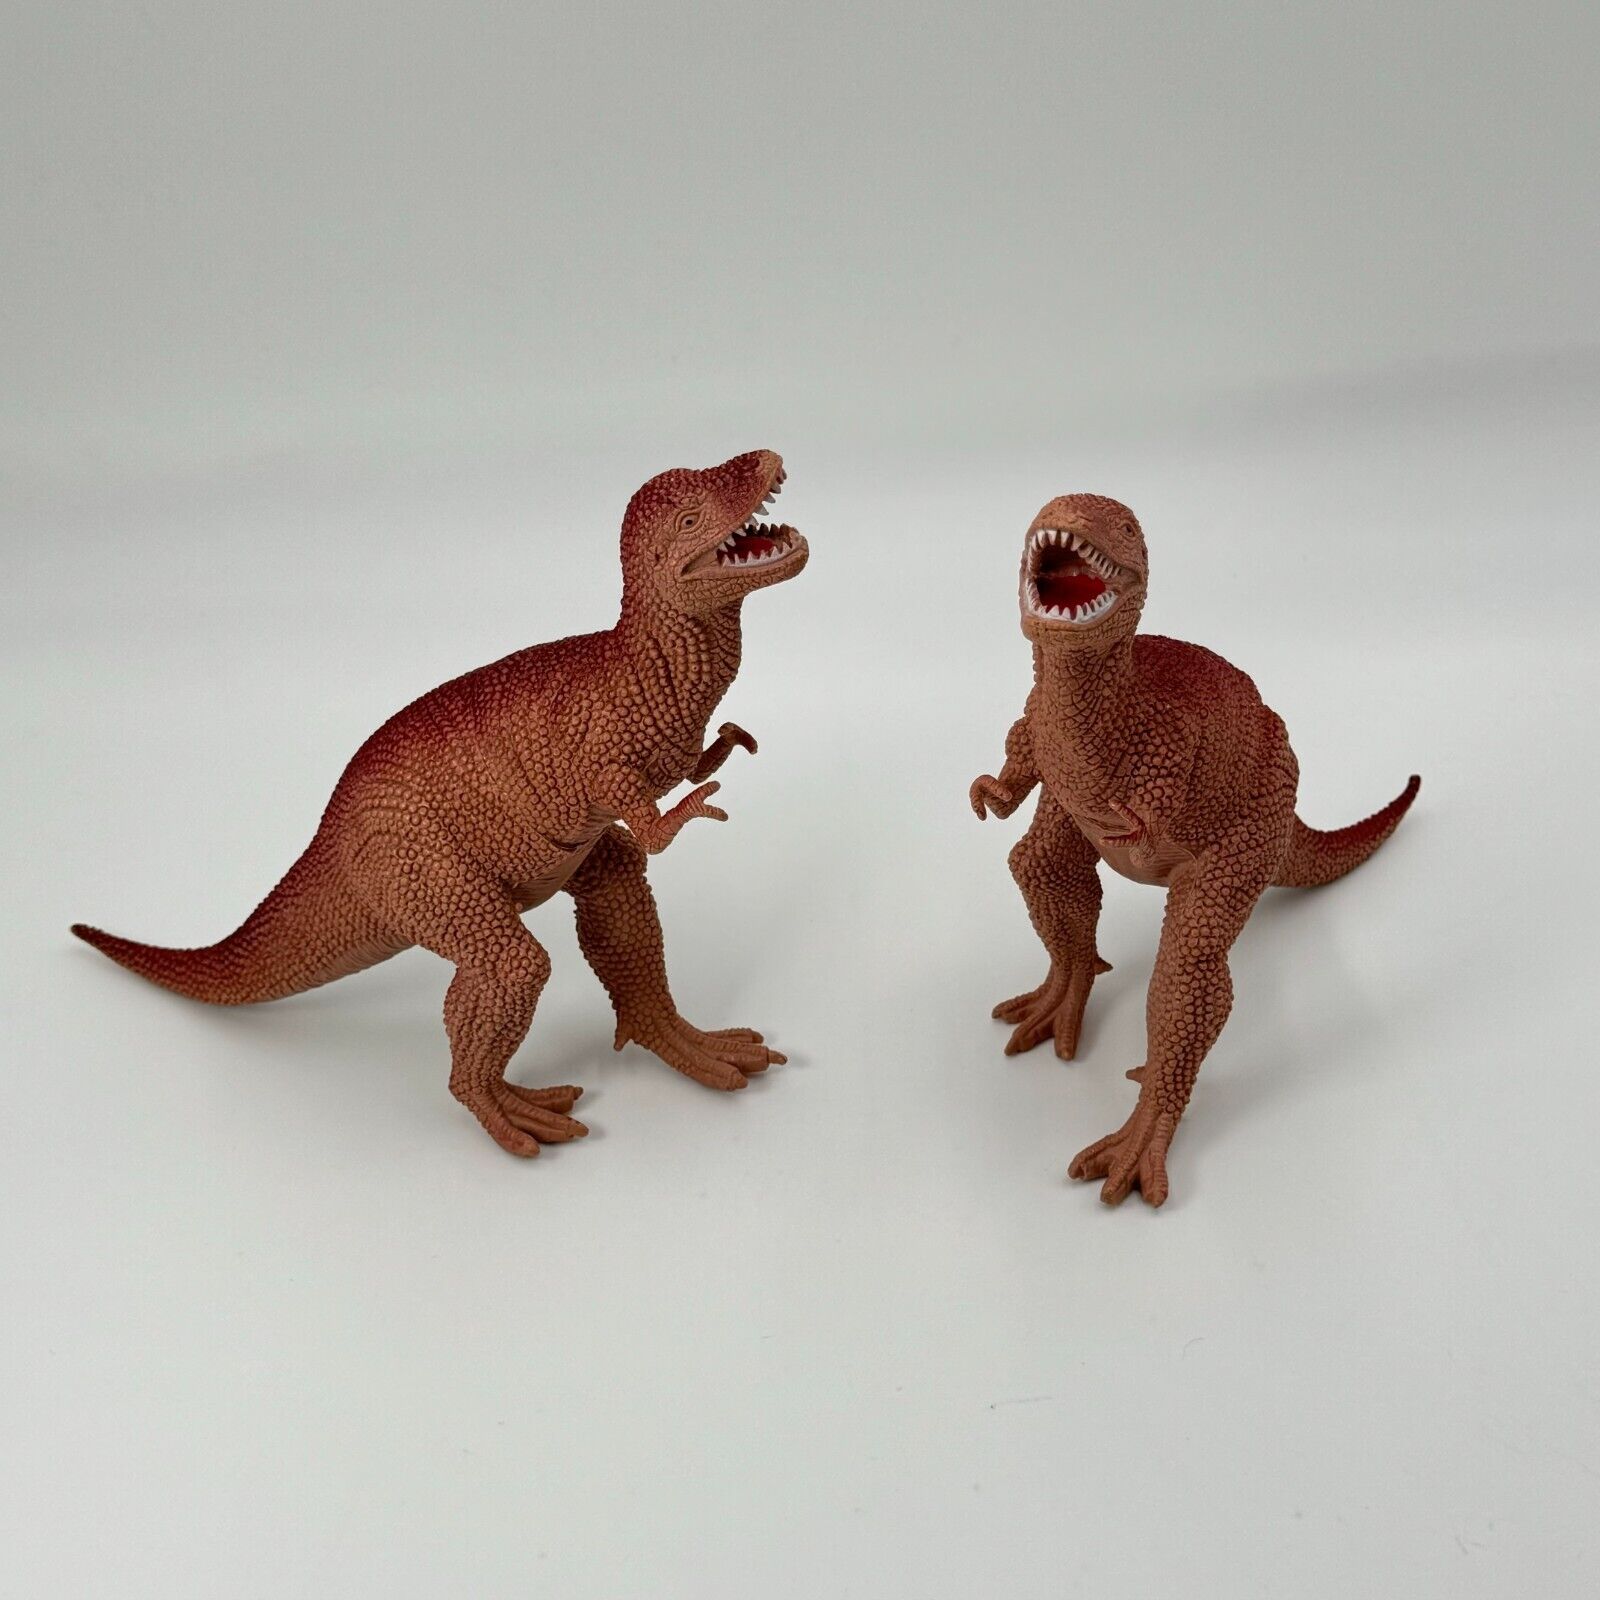 Huge Lot of Plastic Dinisaur Figures Assortment of Dinos Vintage Classic Kids To